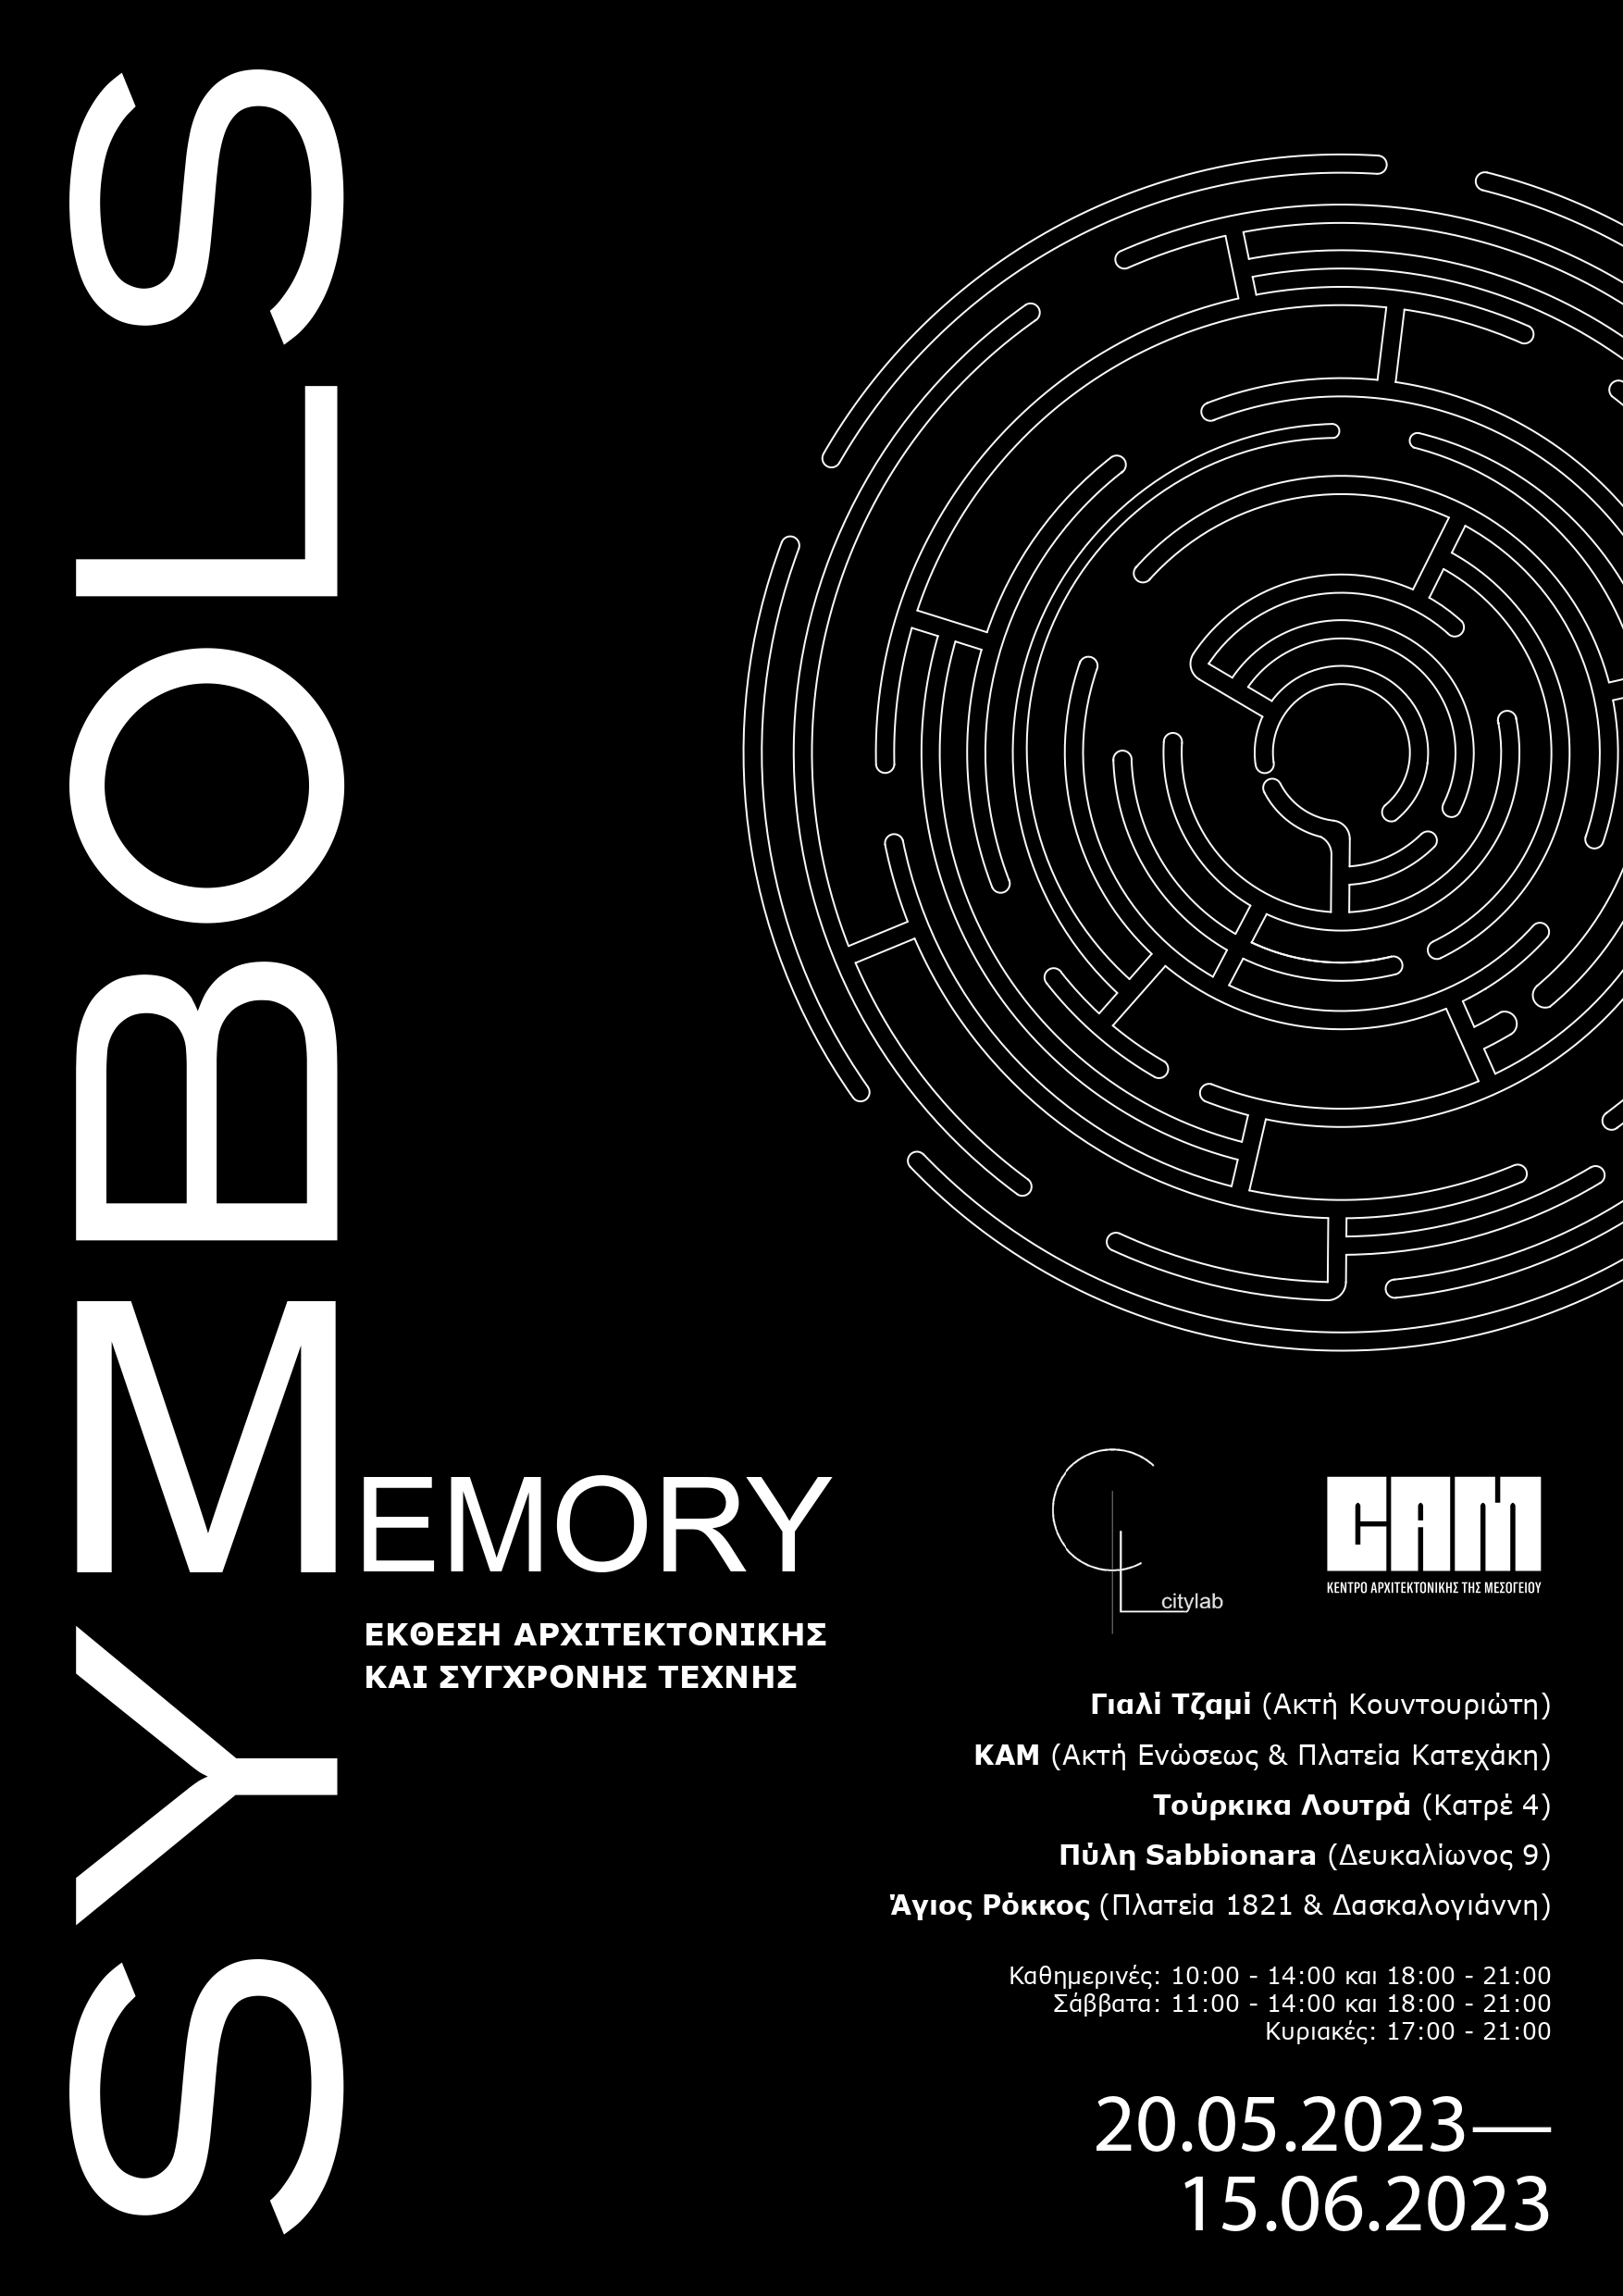 SYMBOLS II: Μemory